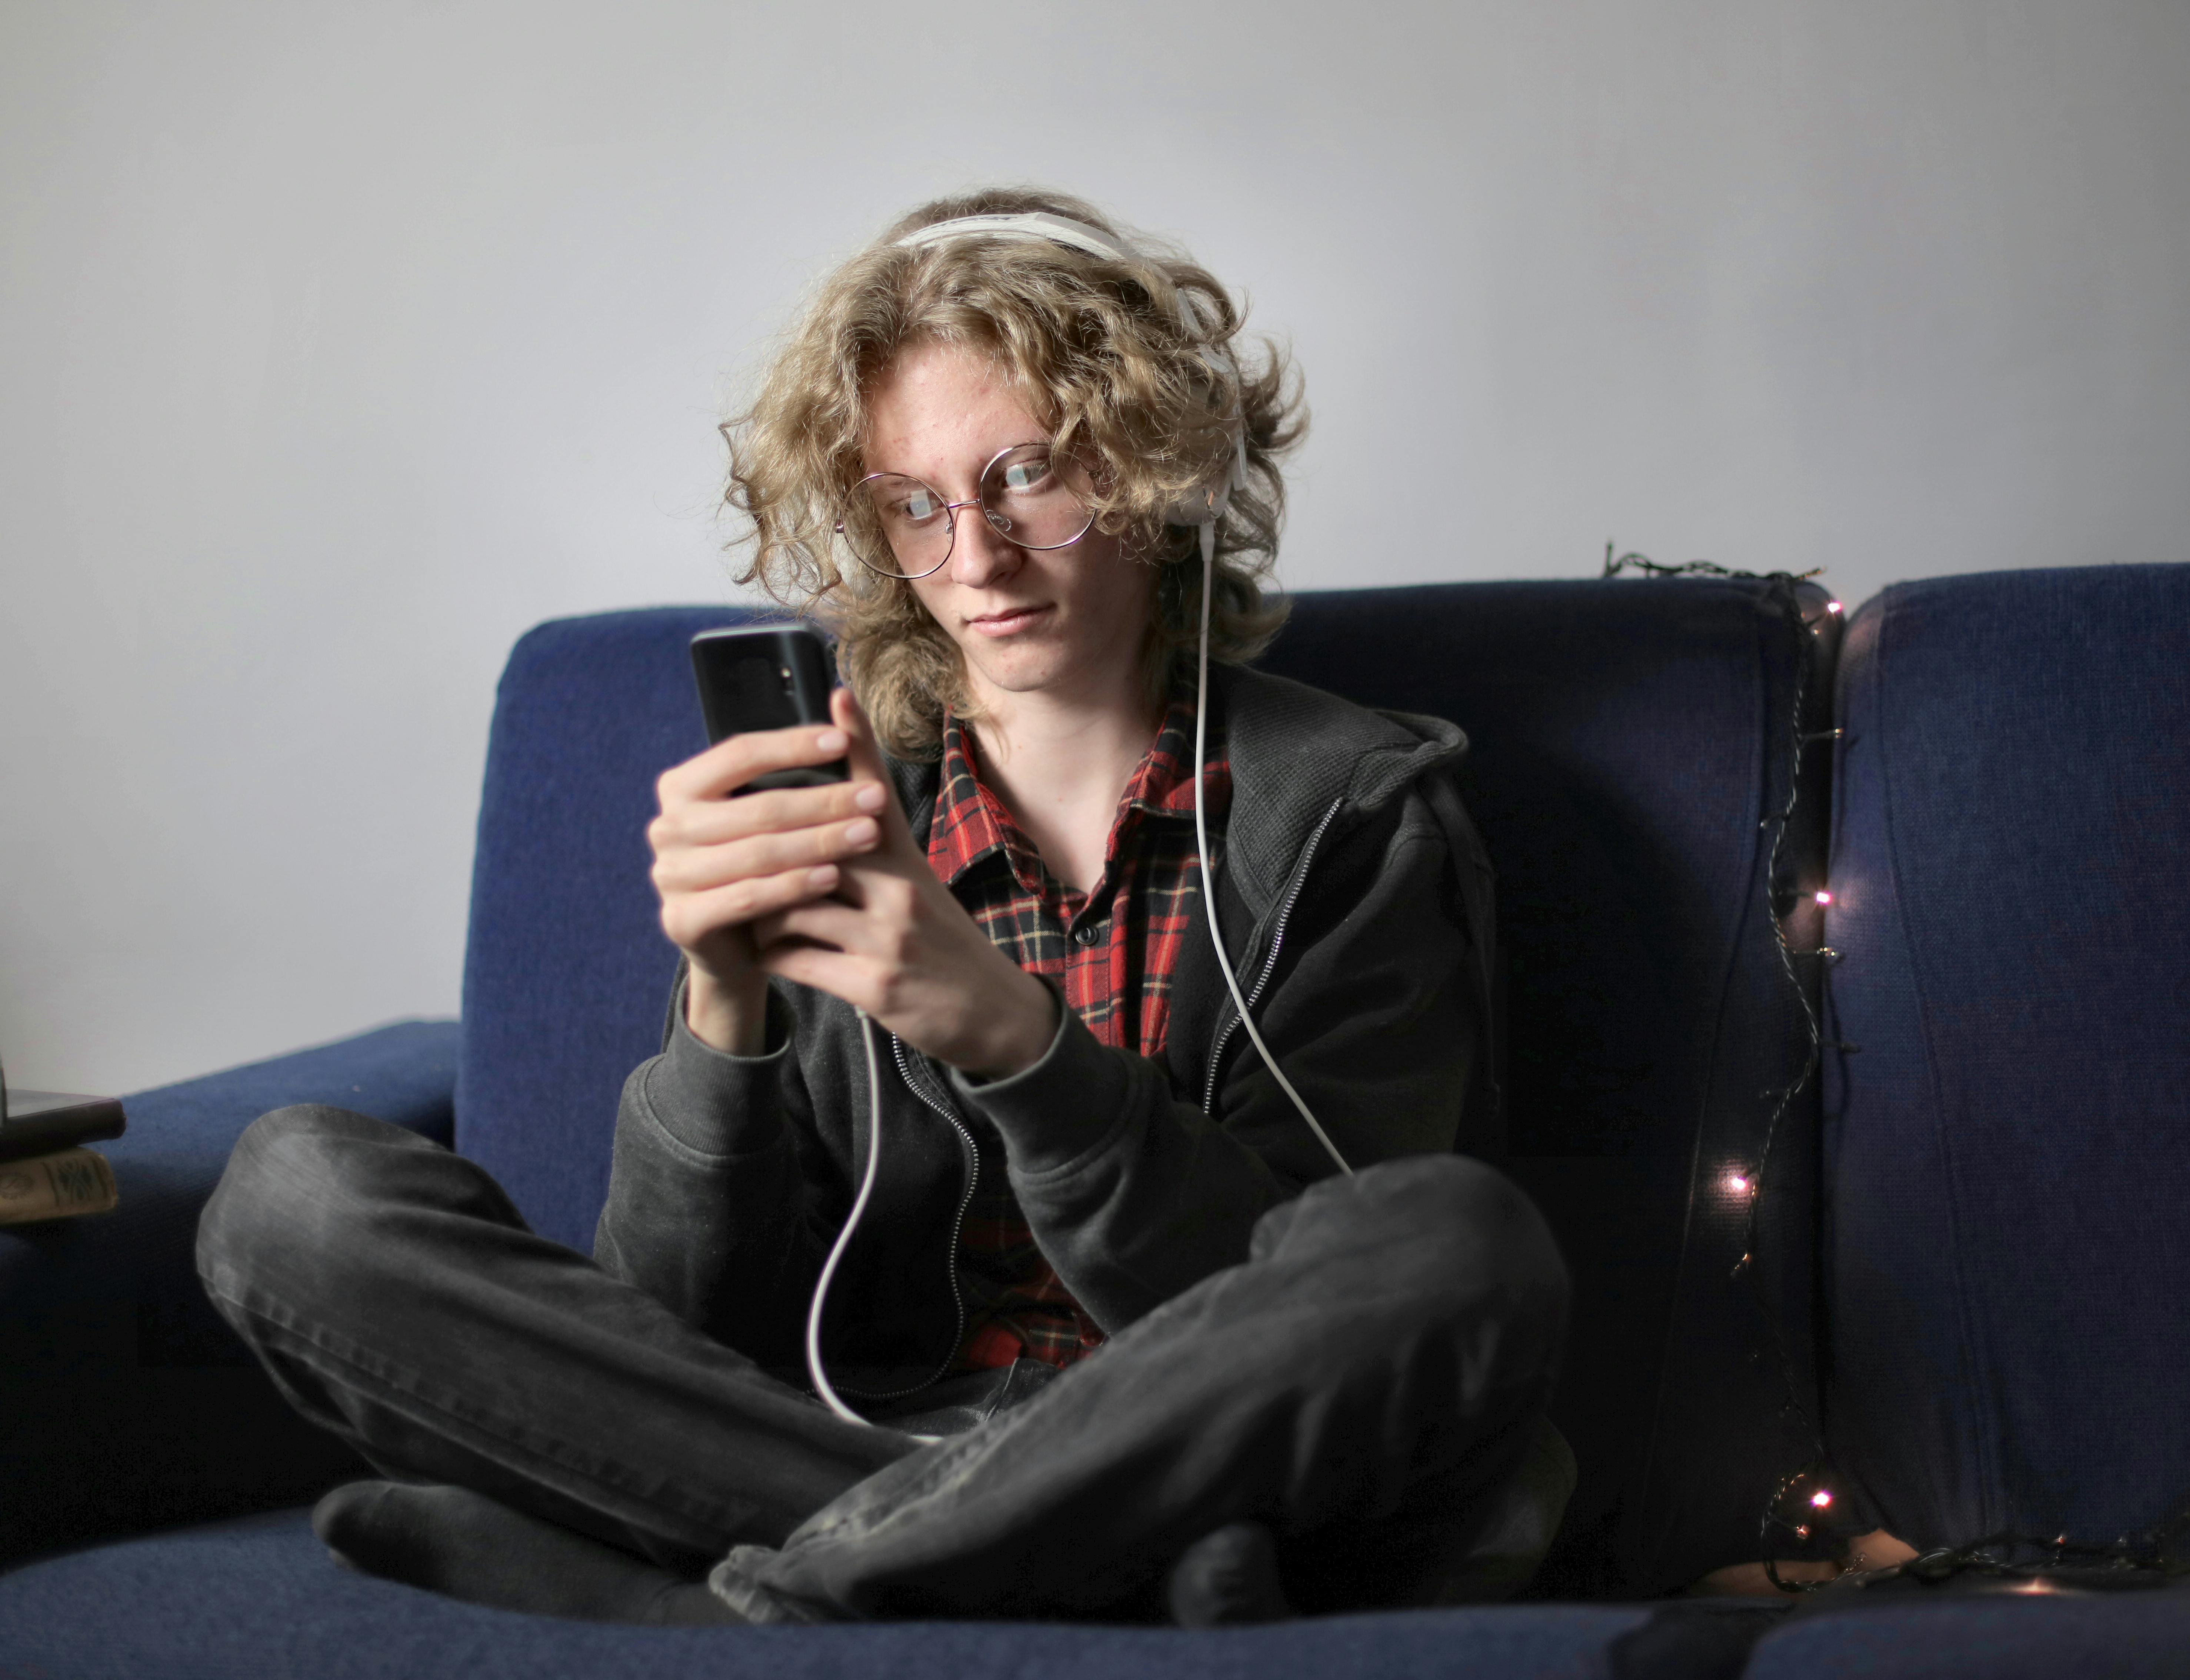 male teen with headphones browsing smartphone